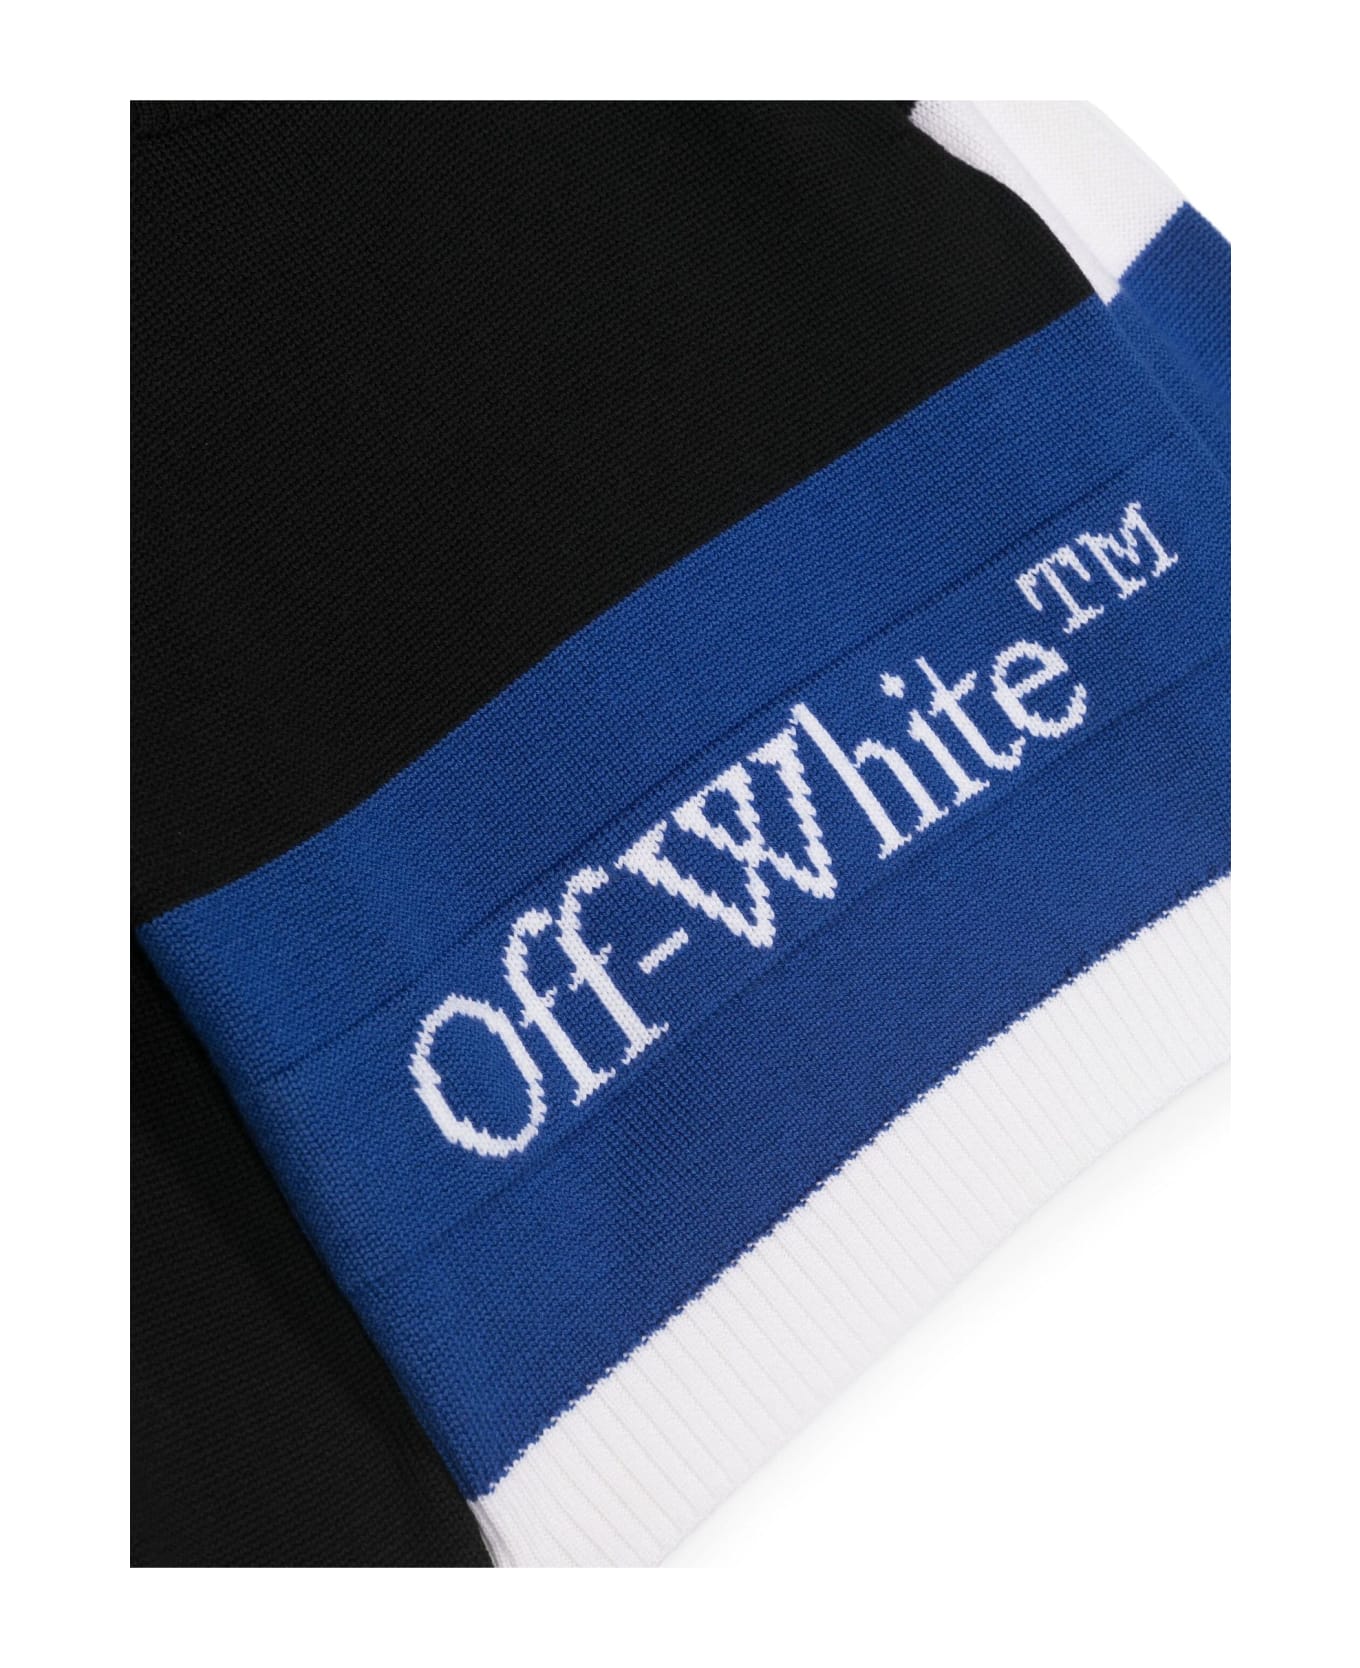 Off-White Off White Sweaters Black - Black ニットウェア＆スウェットシャツ